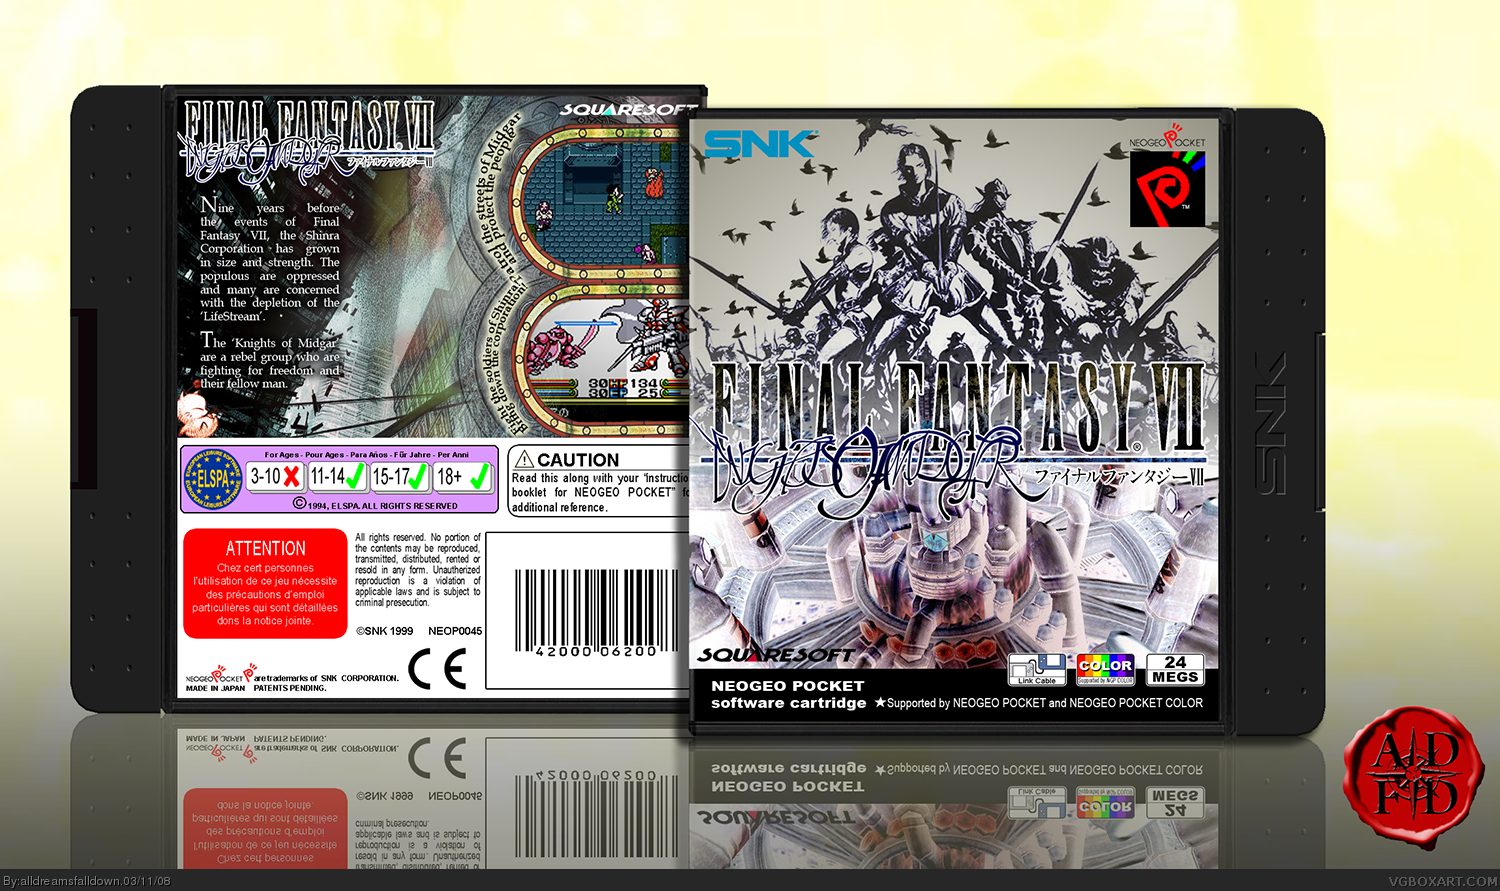 Final Fantasy VII: Knights of Midgar box cover